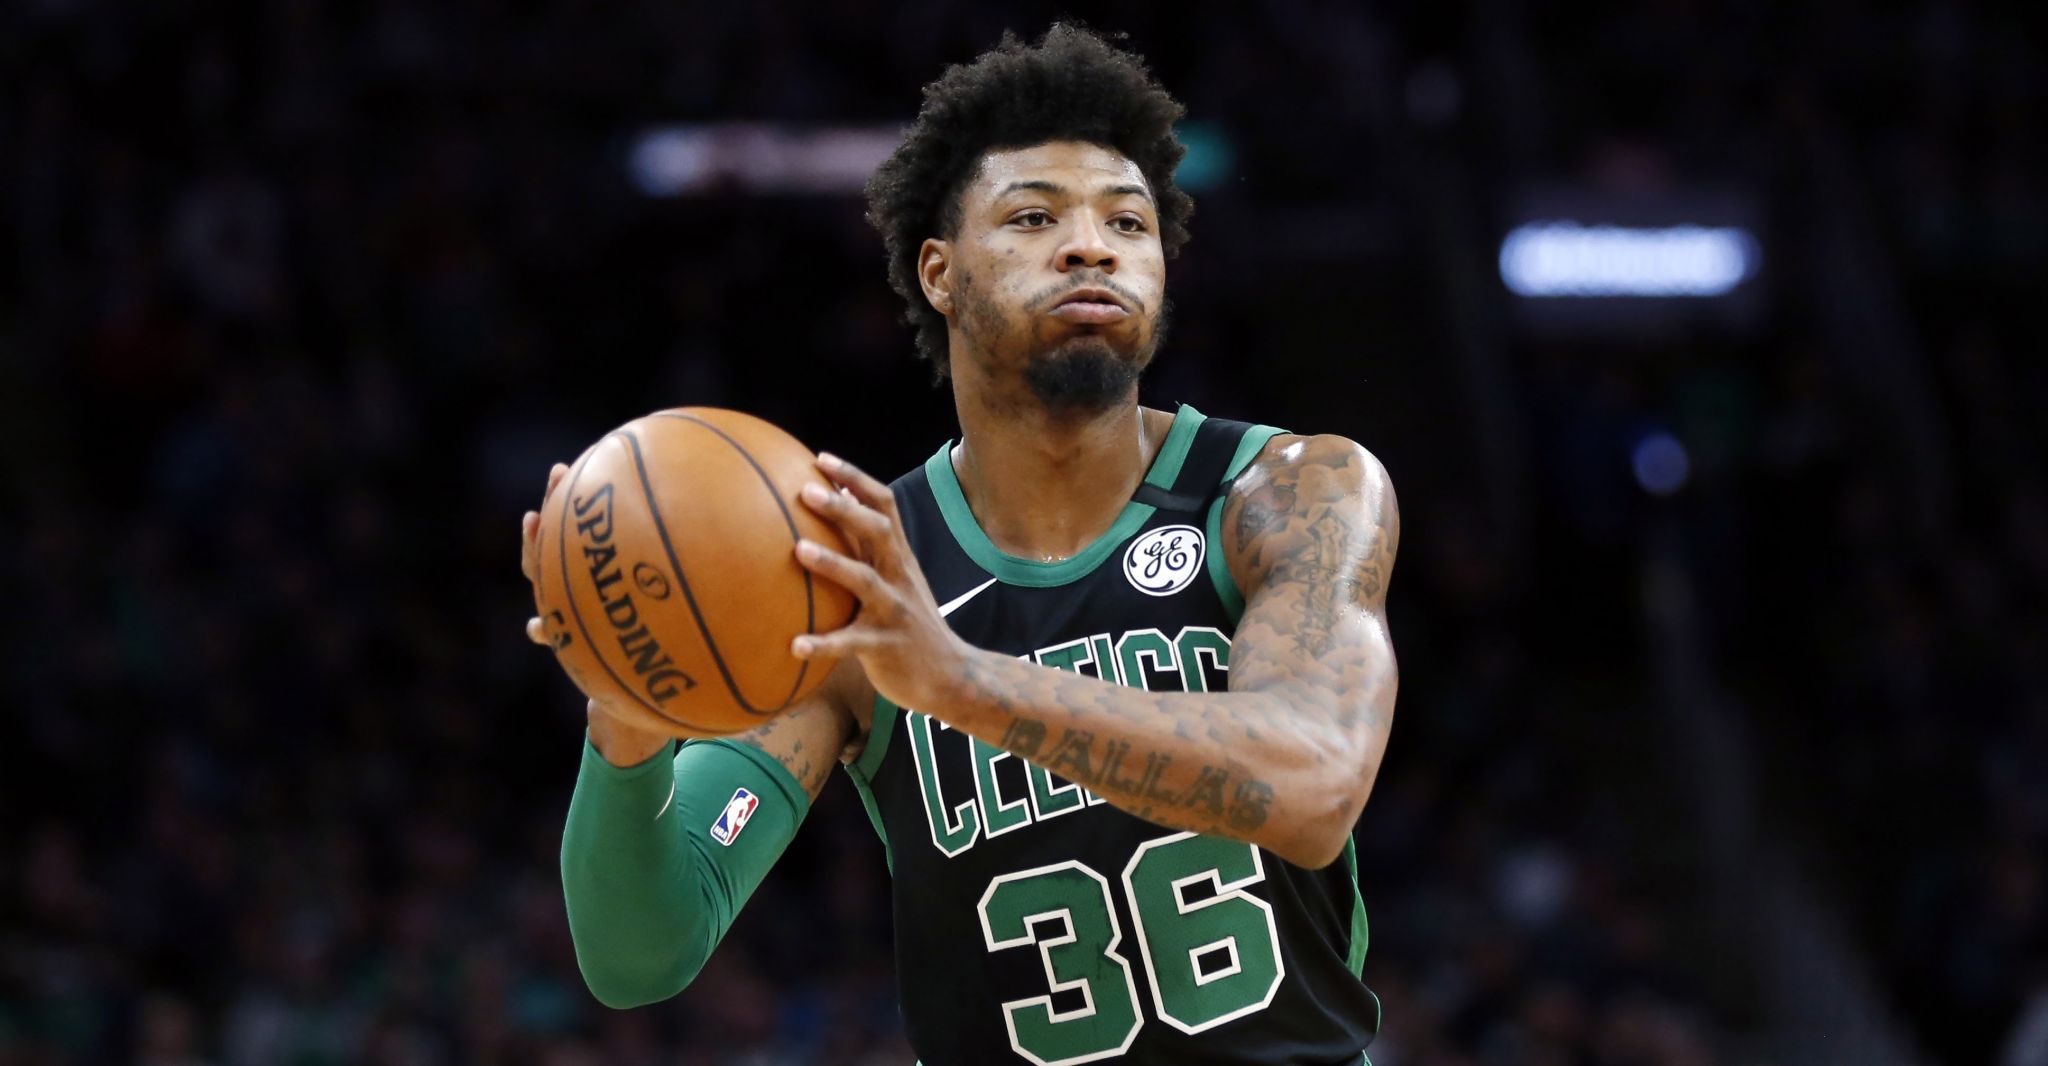 Celtics' Marcus Smart reveals positive COVID-19 test